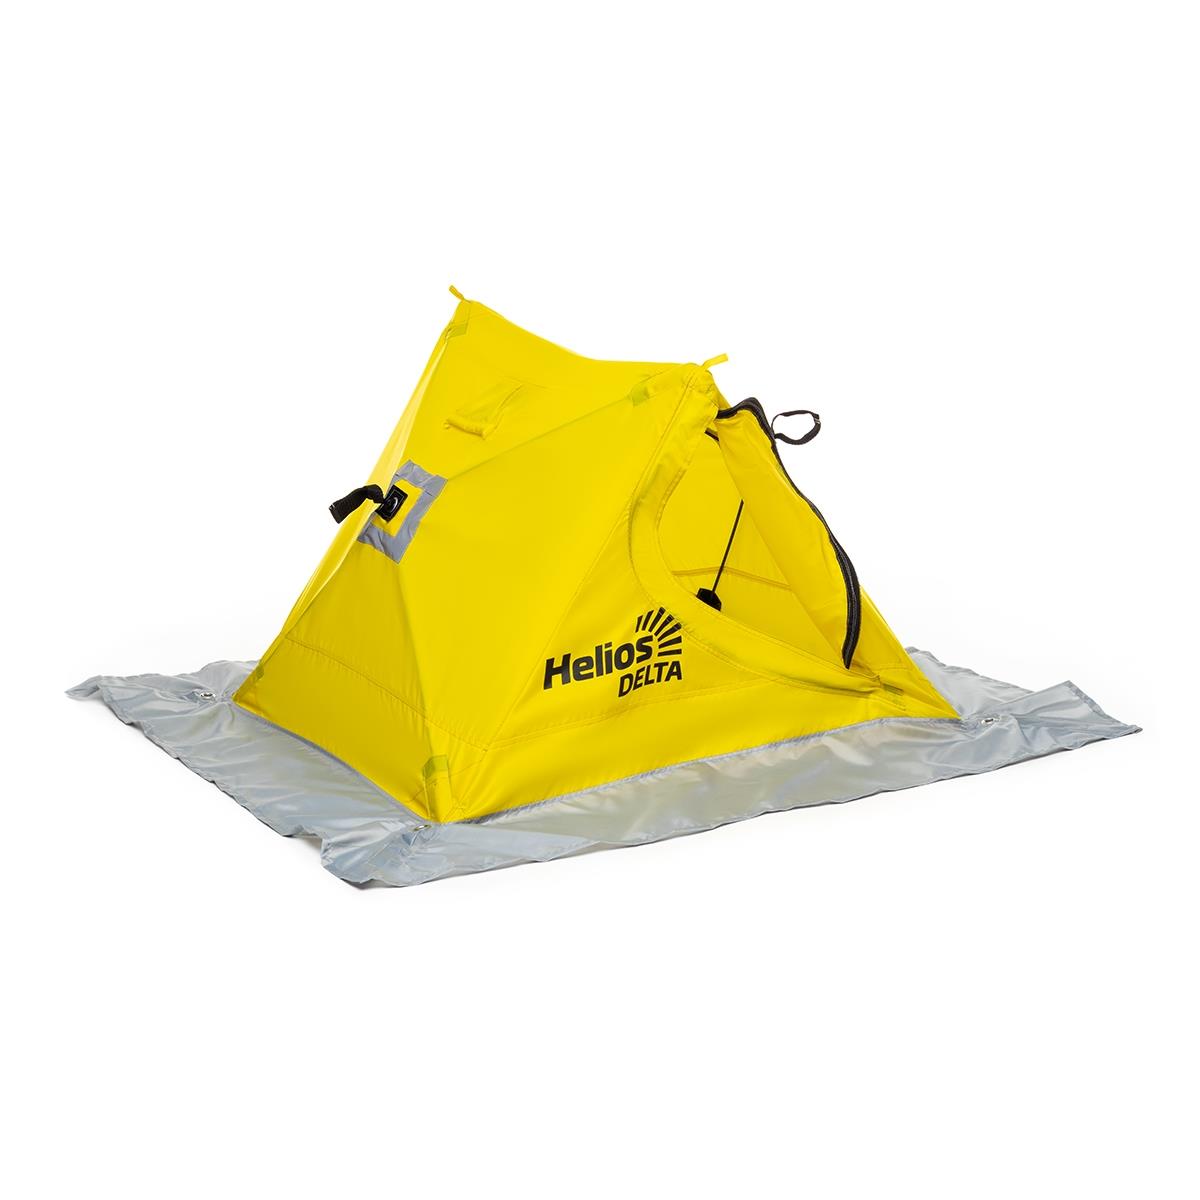 Мини палатка двускатная yellow Helios палатка игровая наша игрушка пчелкин домик